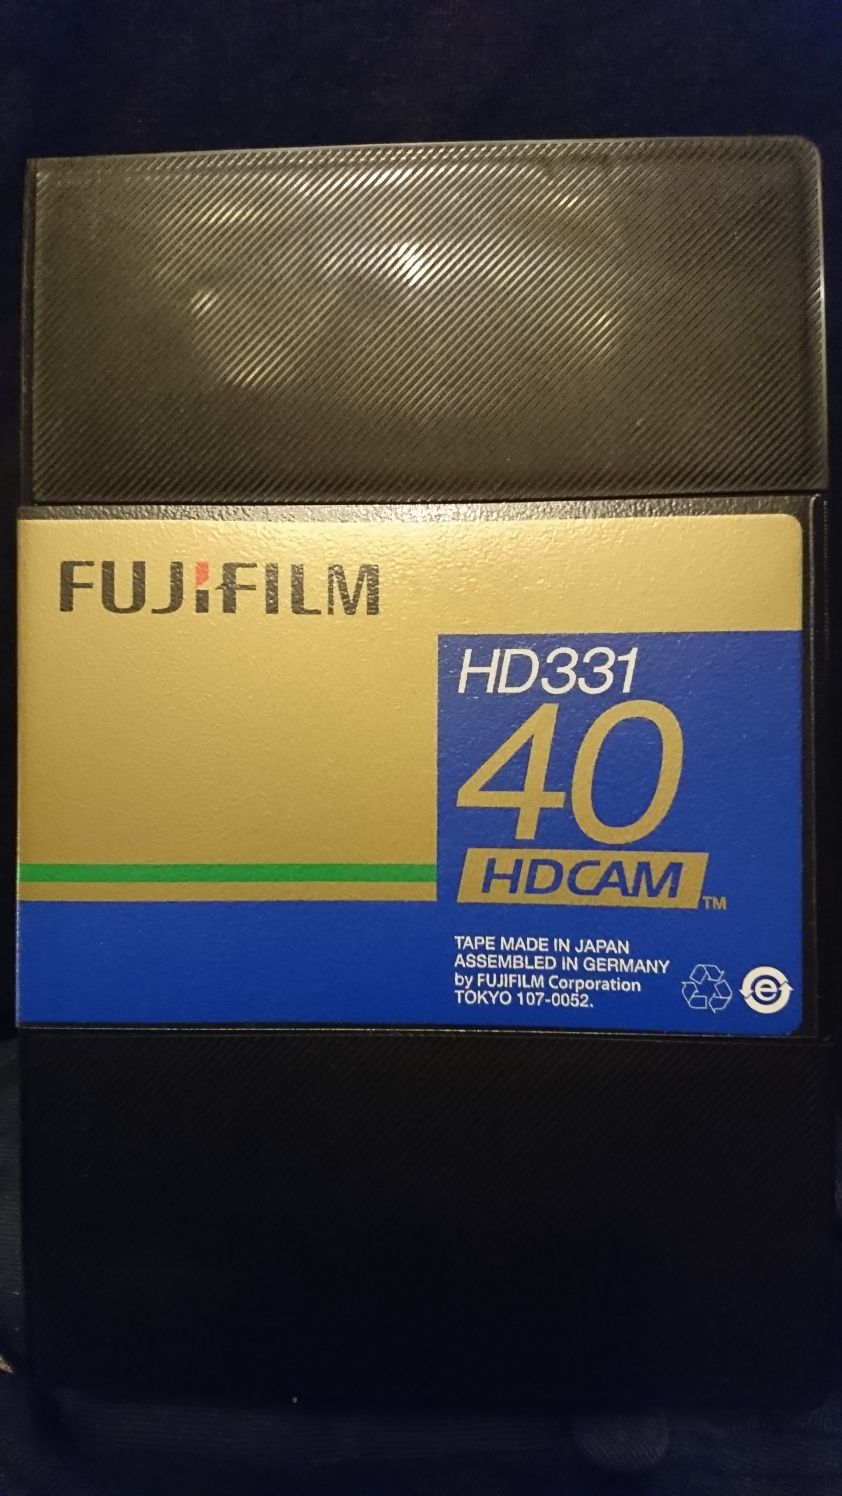 Kaseta HDCAM 40 Fujifilm nowa 2szt.